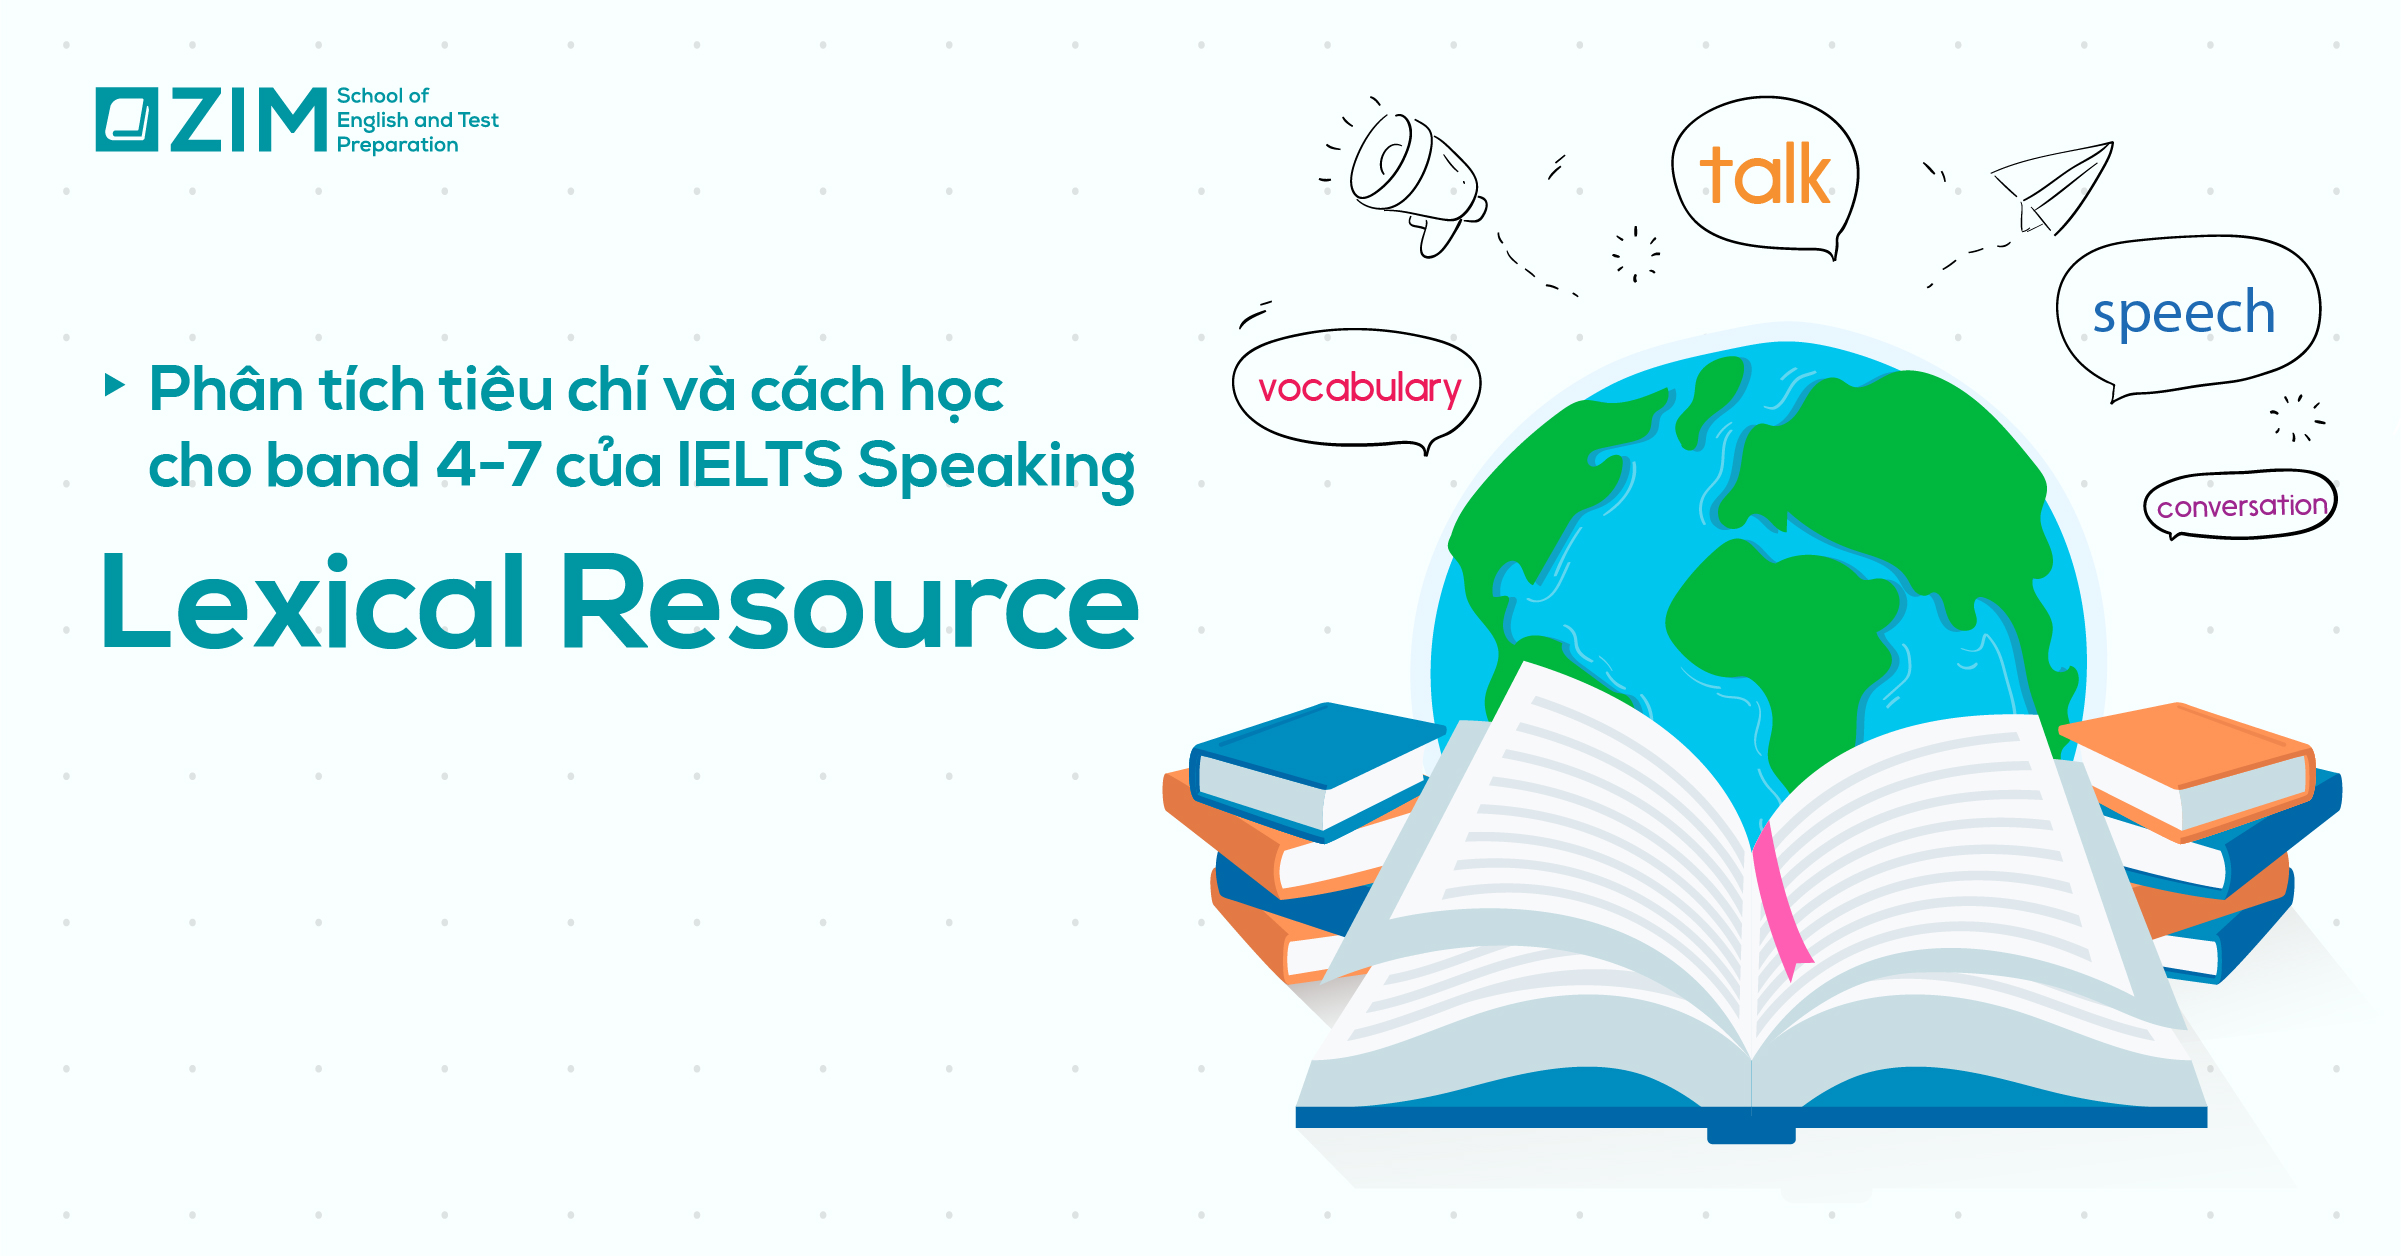 lexical-resource-la-gi-cach-hoc-lexical-resource-cho-band-4-7-cua-ielts-speaking